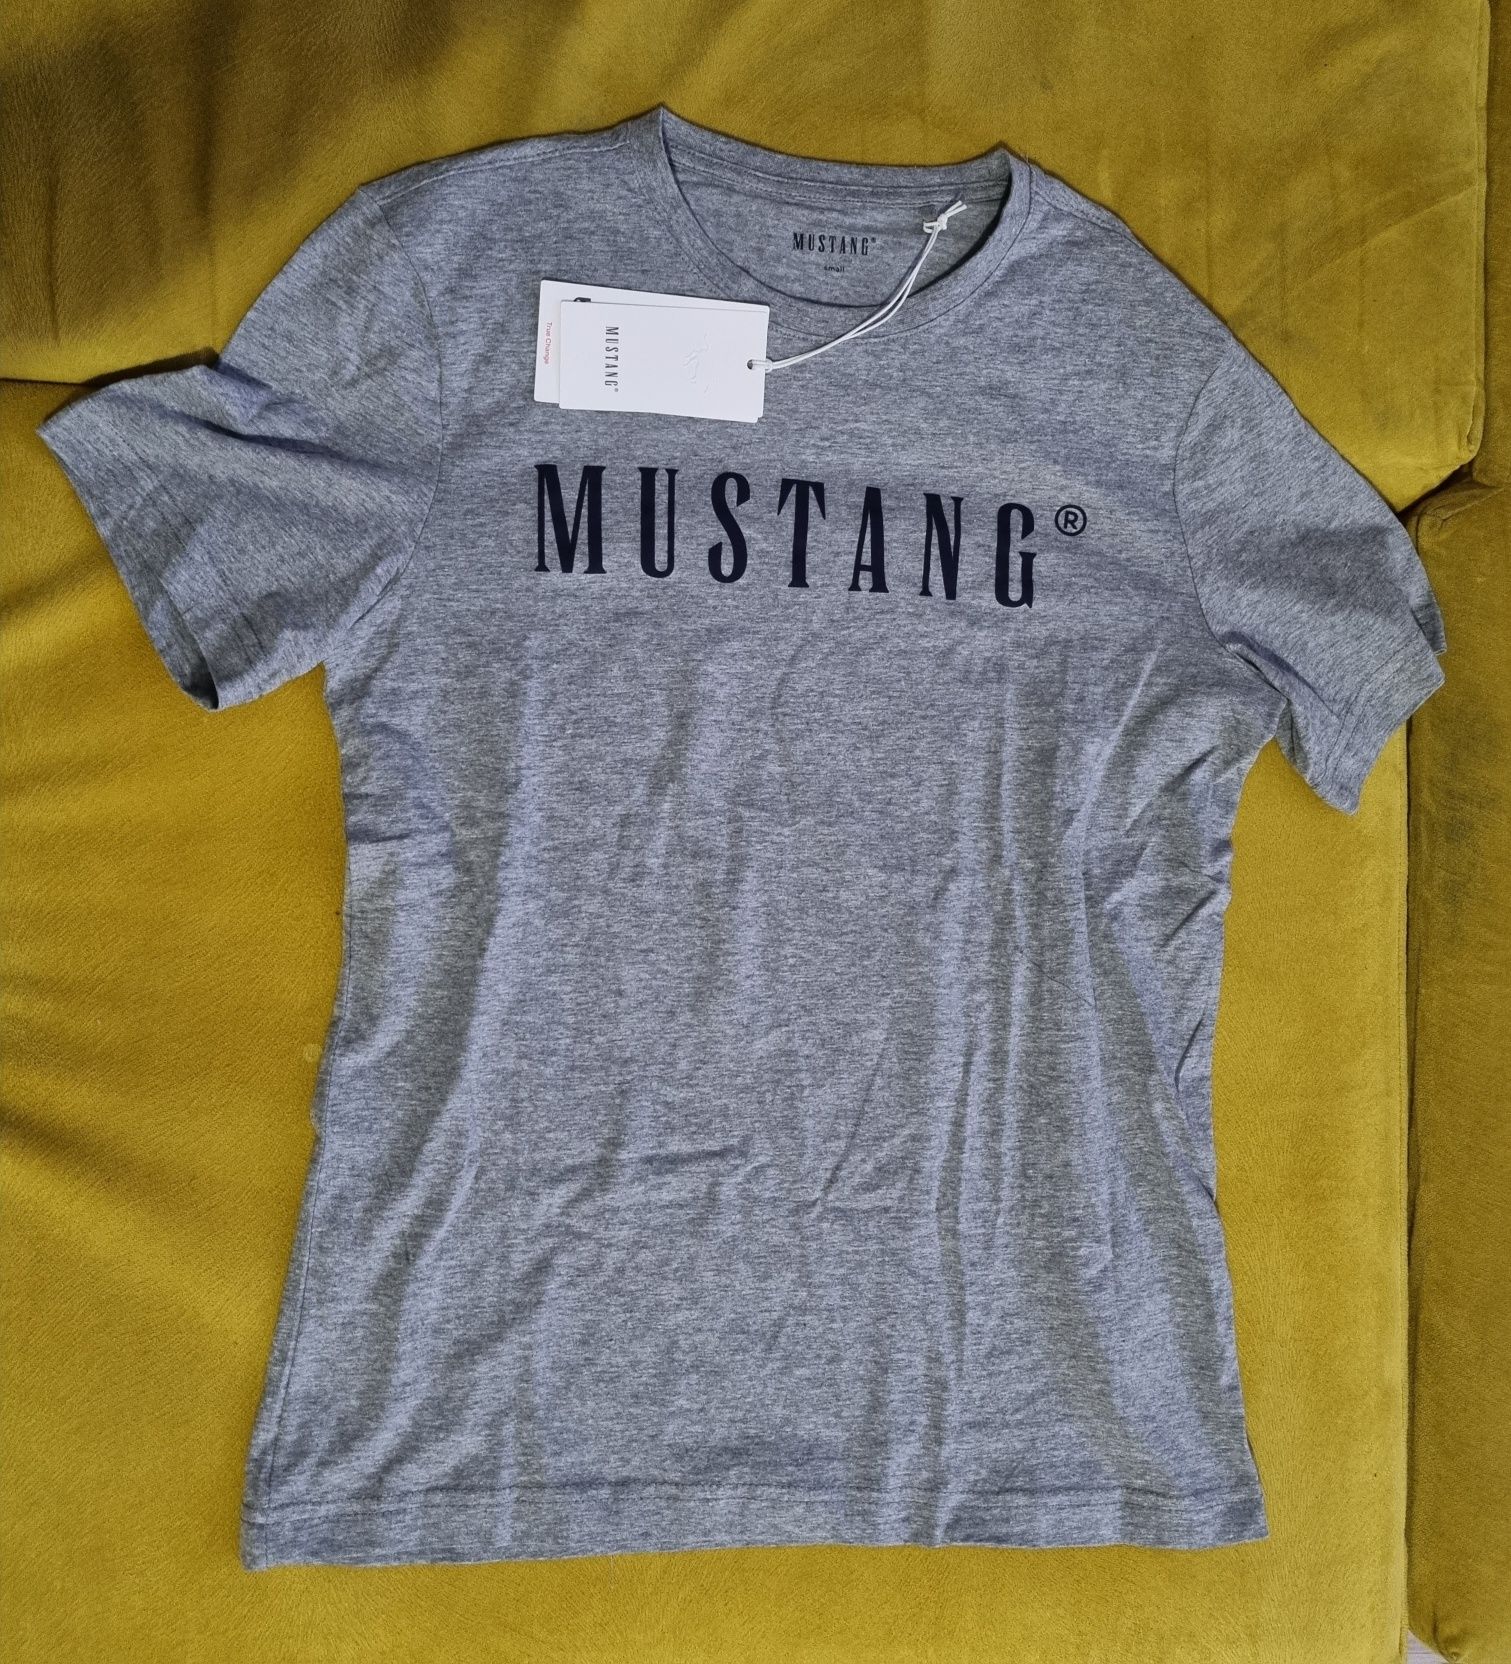 Nowy T-shirt Mustang, rozmiar S